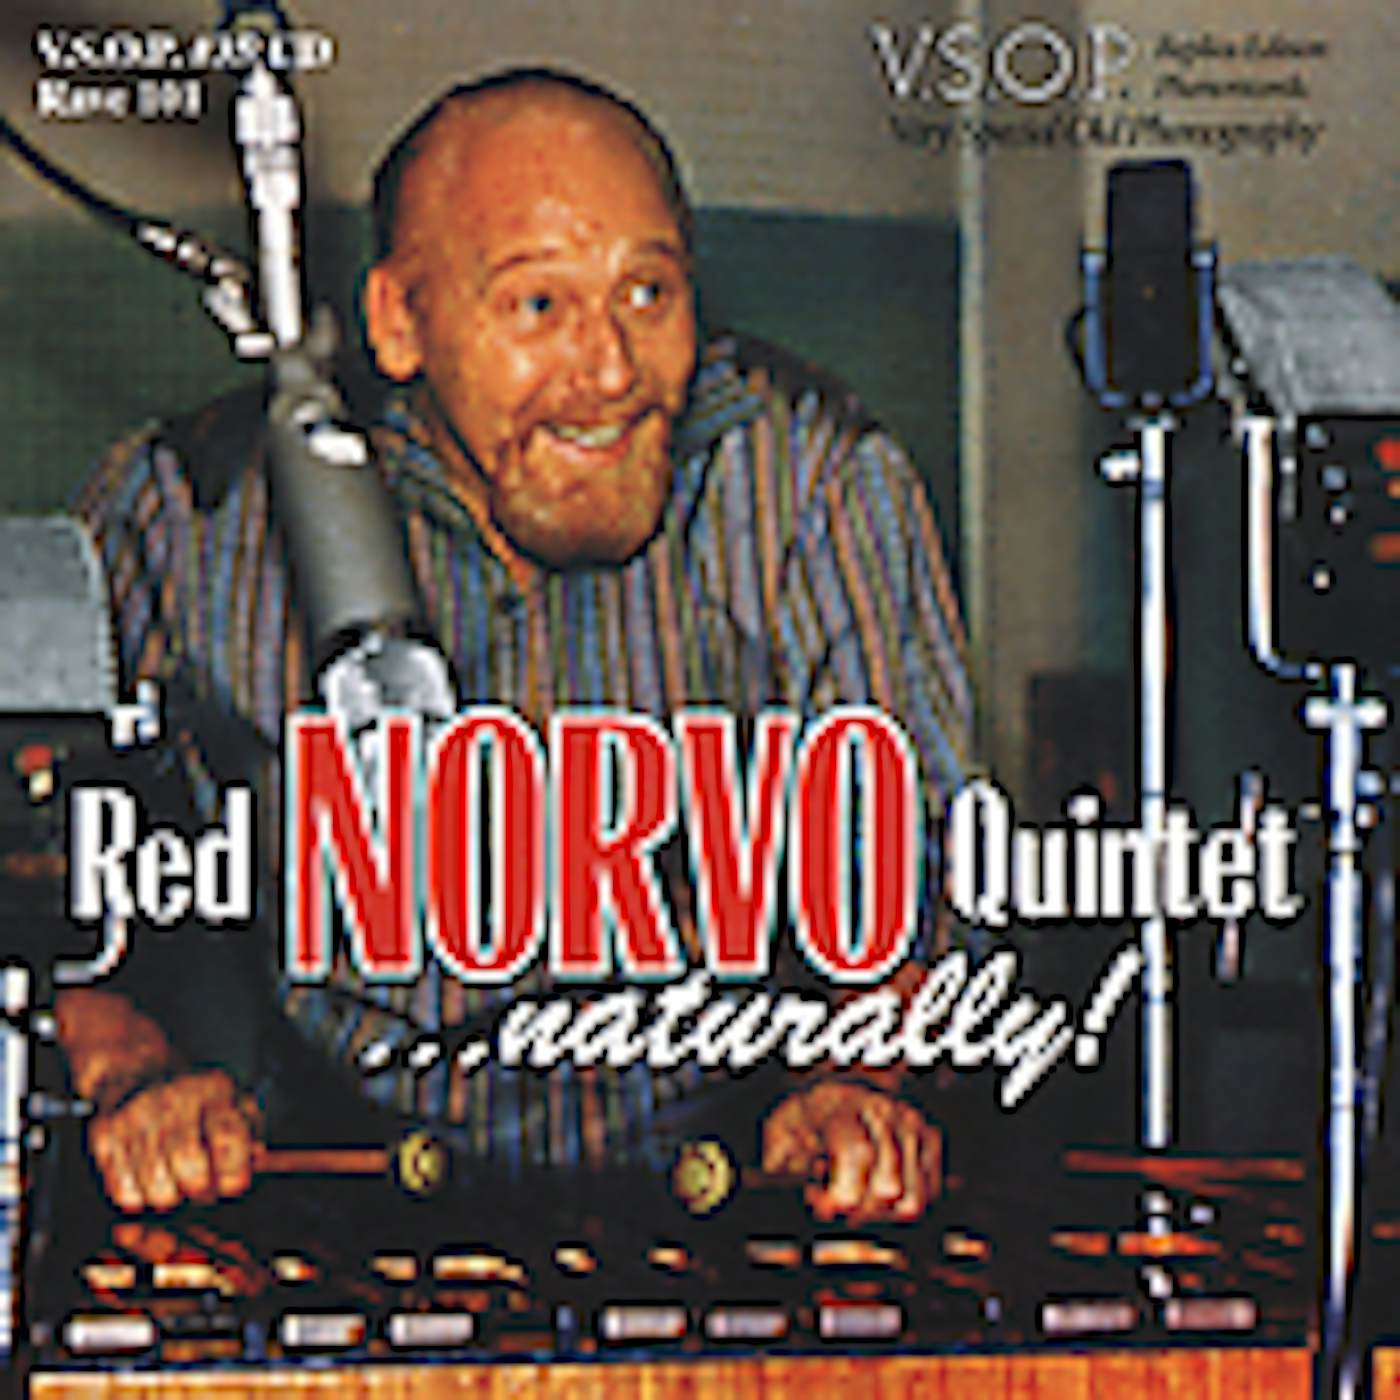 Red Norvo NATURALLY CD